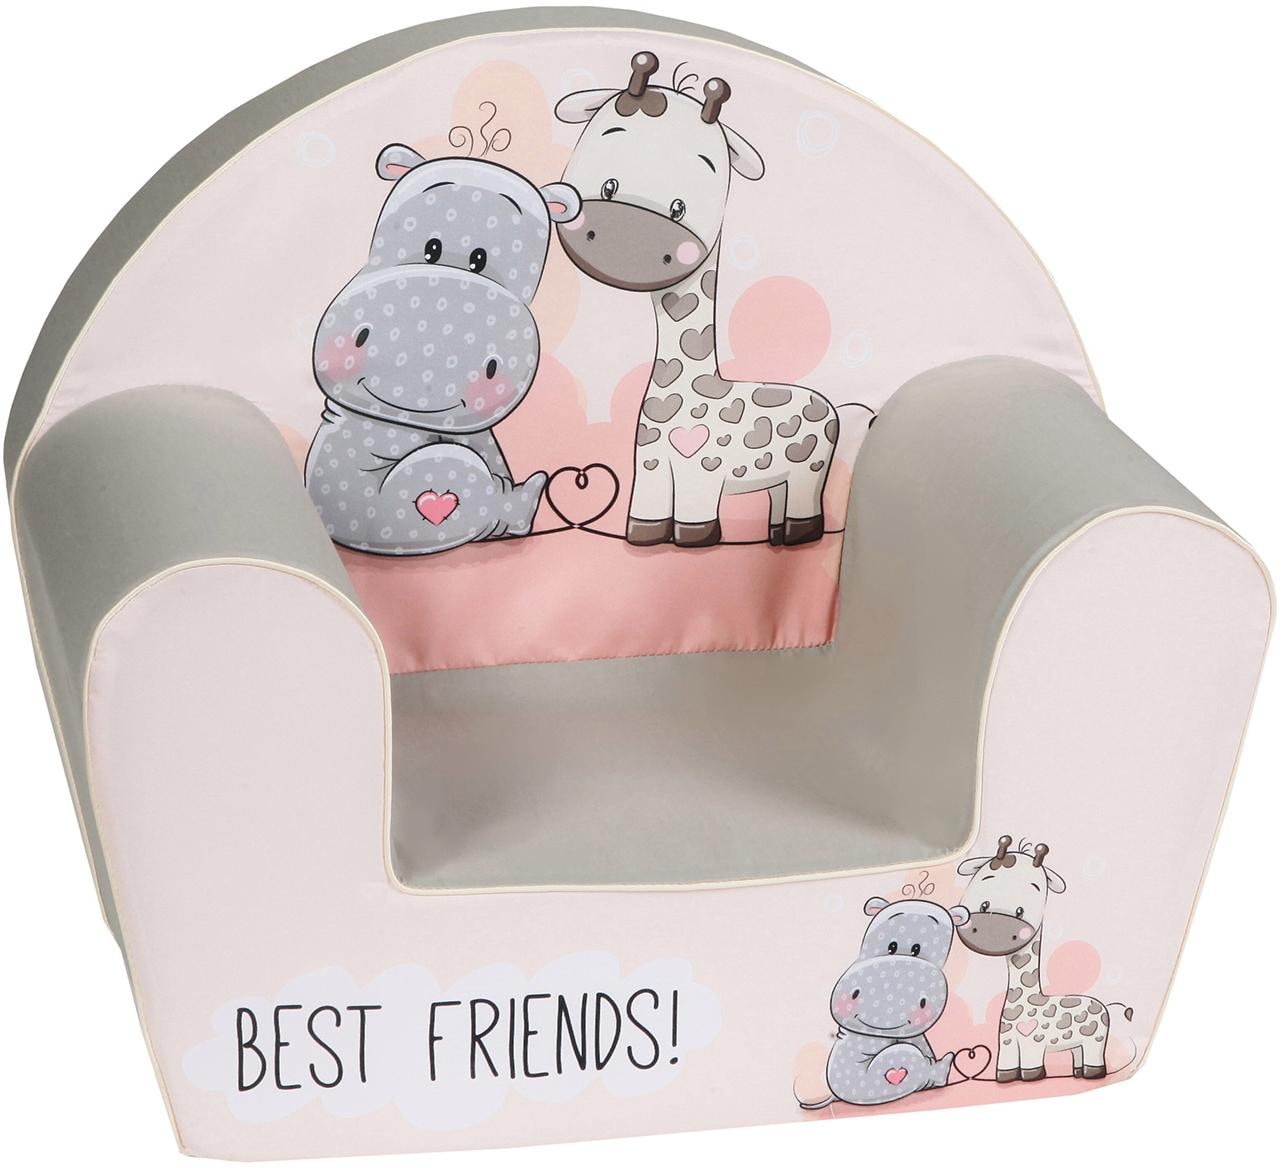 in Knorrtoys® Sessel Friends«, bei »Best Made für Kinder; Europe